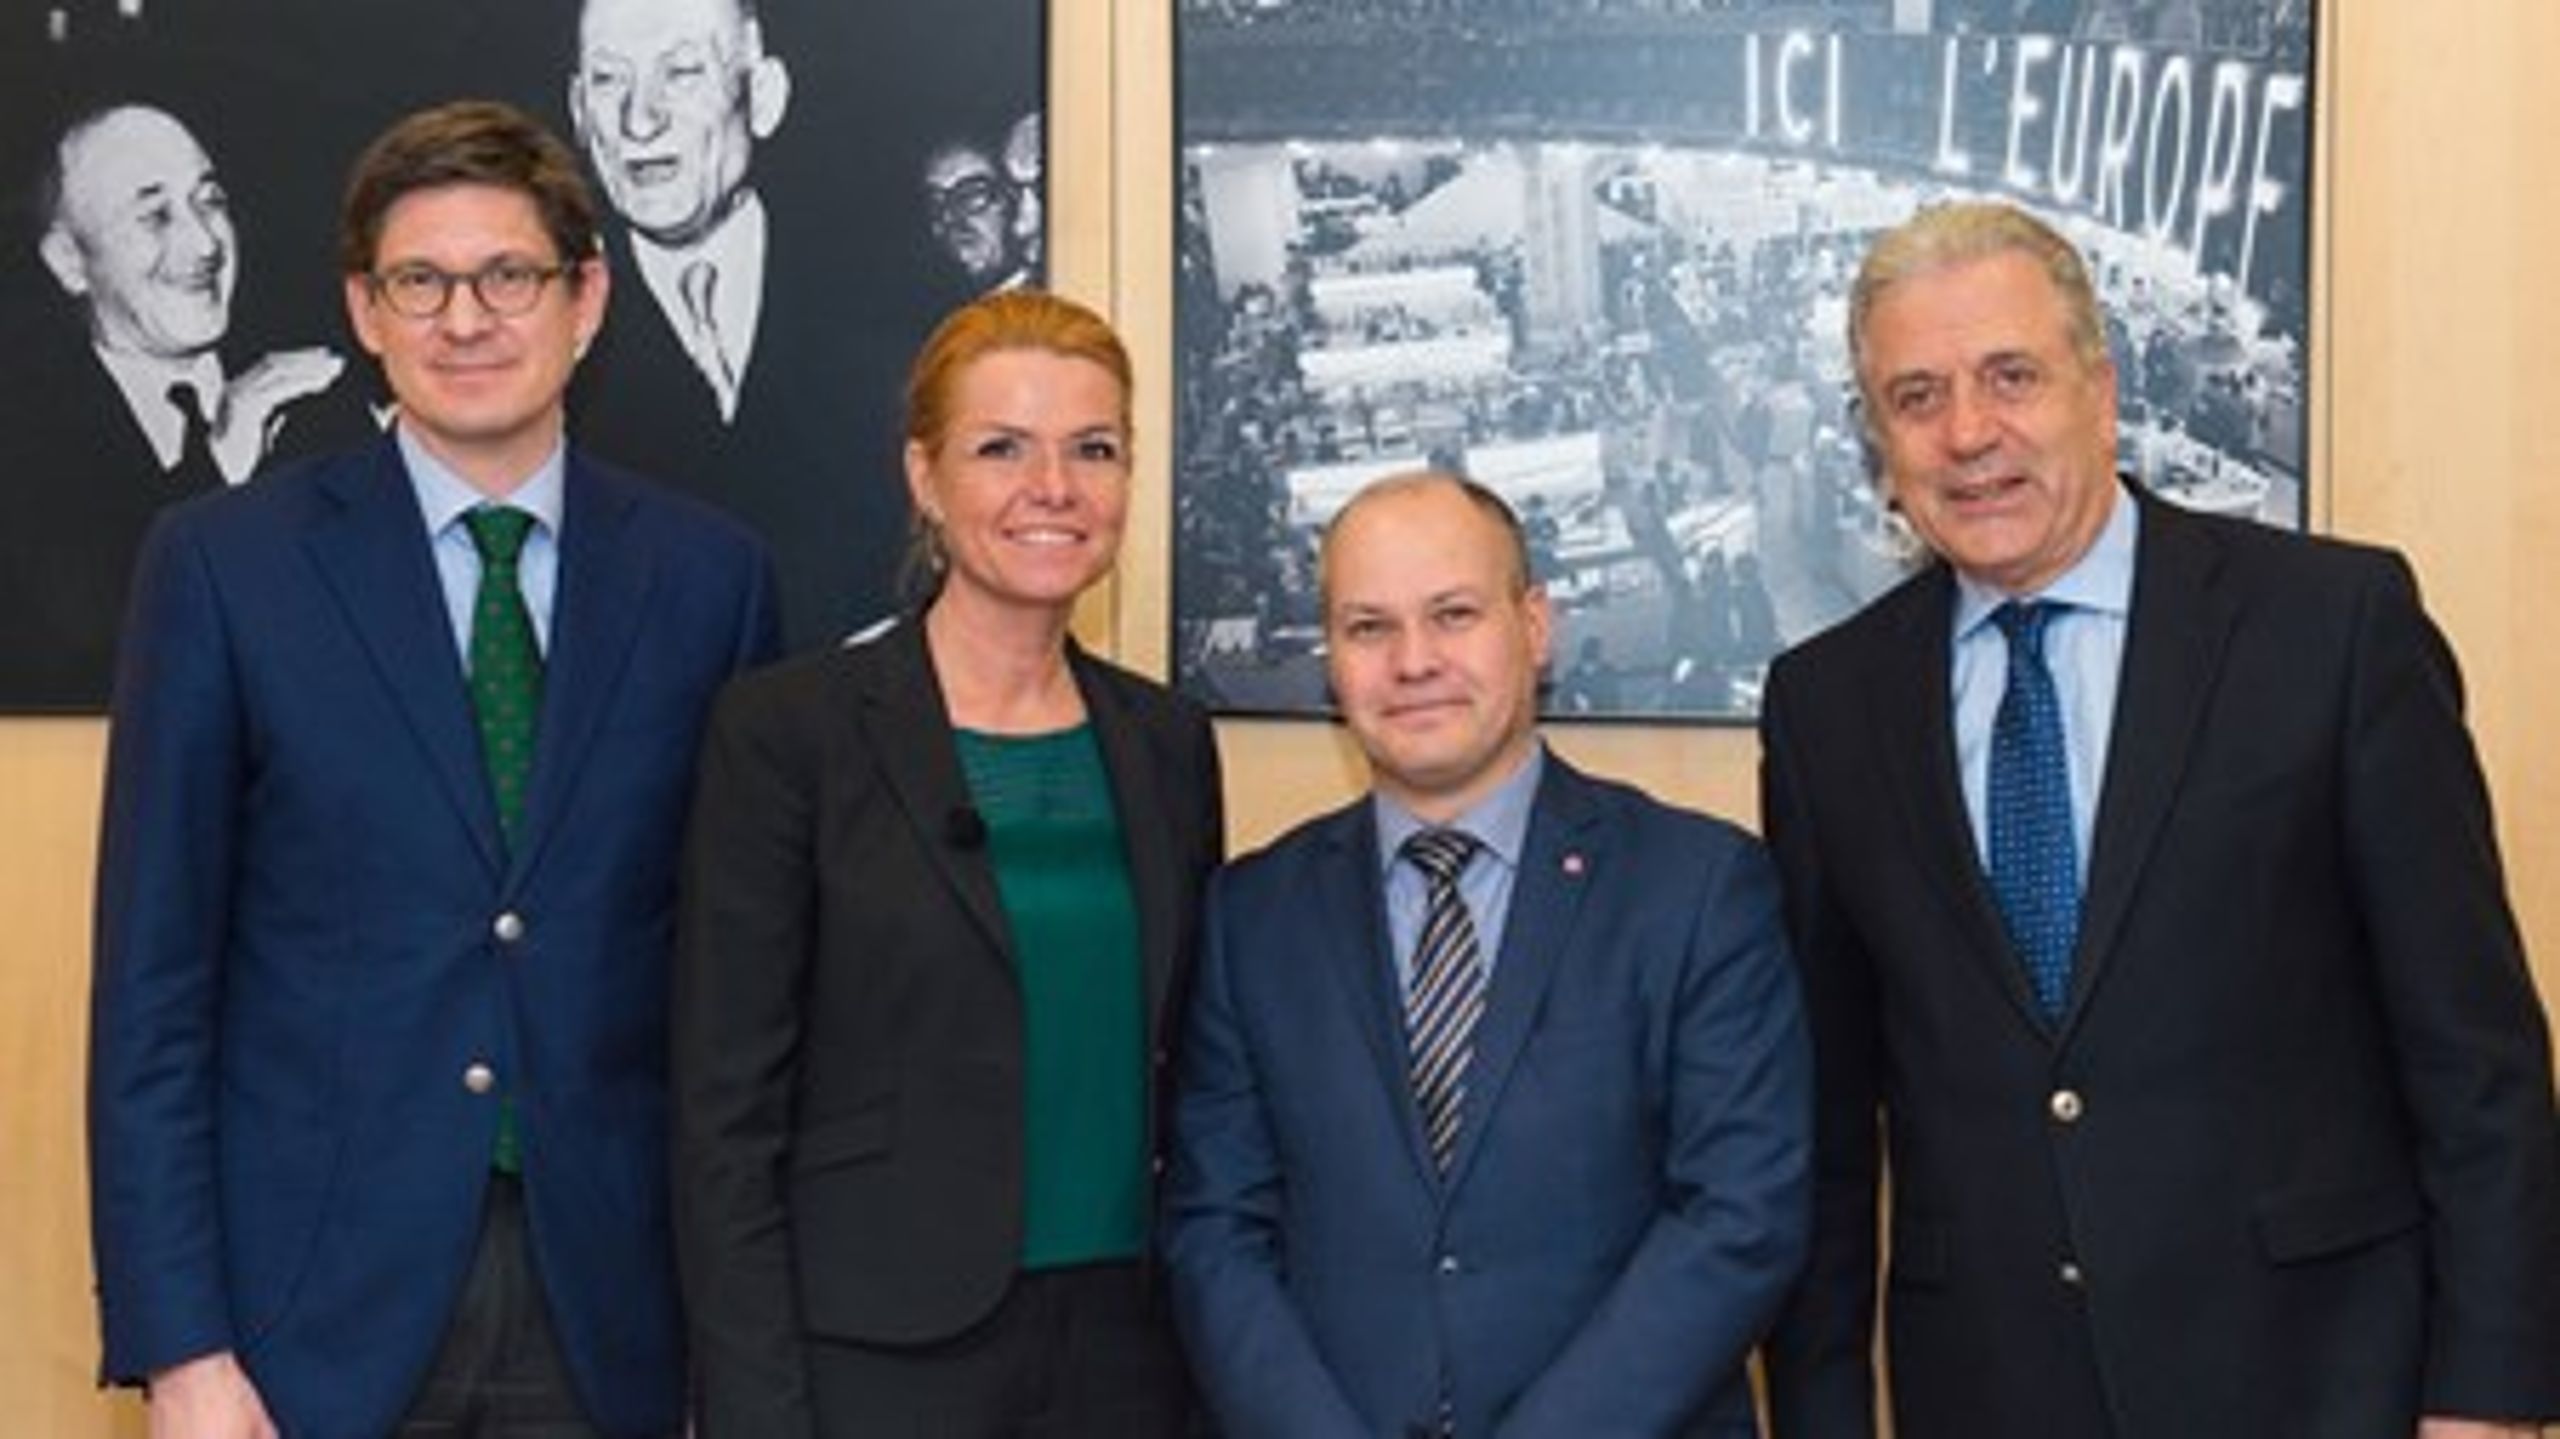 Fra venstre: Tyske&nbsp;Ole Schröder, Inger Støjberg, svenske&nbsp;Morgan Johansson og EU-kommissær&nbsp;Dimitris Avramopoulos ved onsdagens møde i Bruxelles